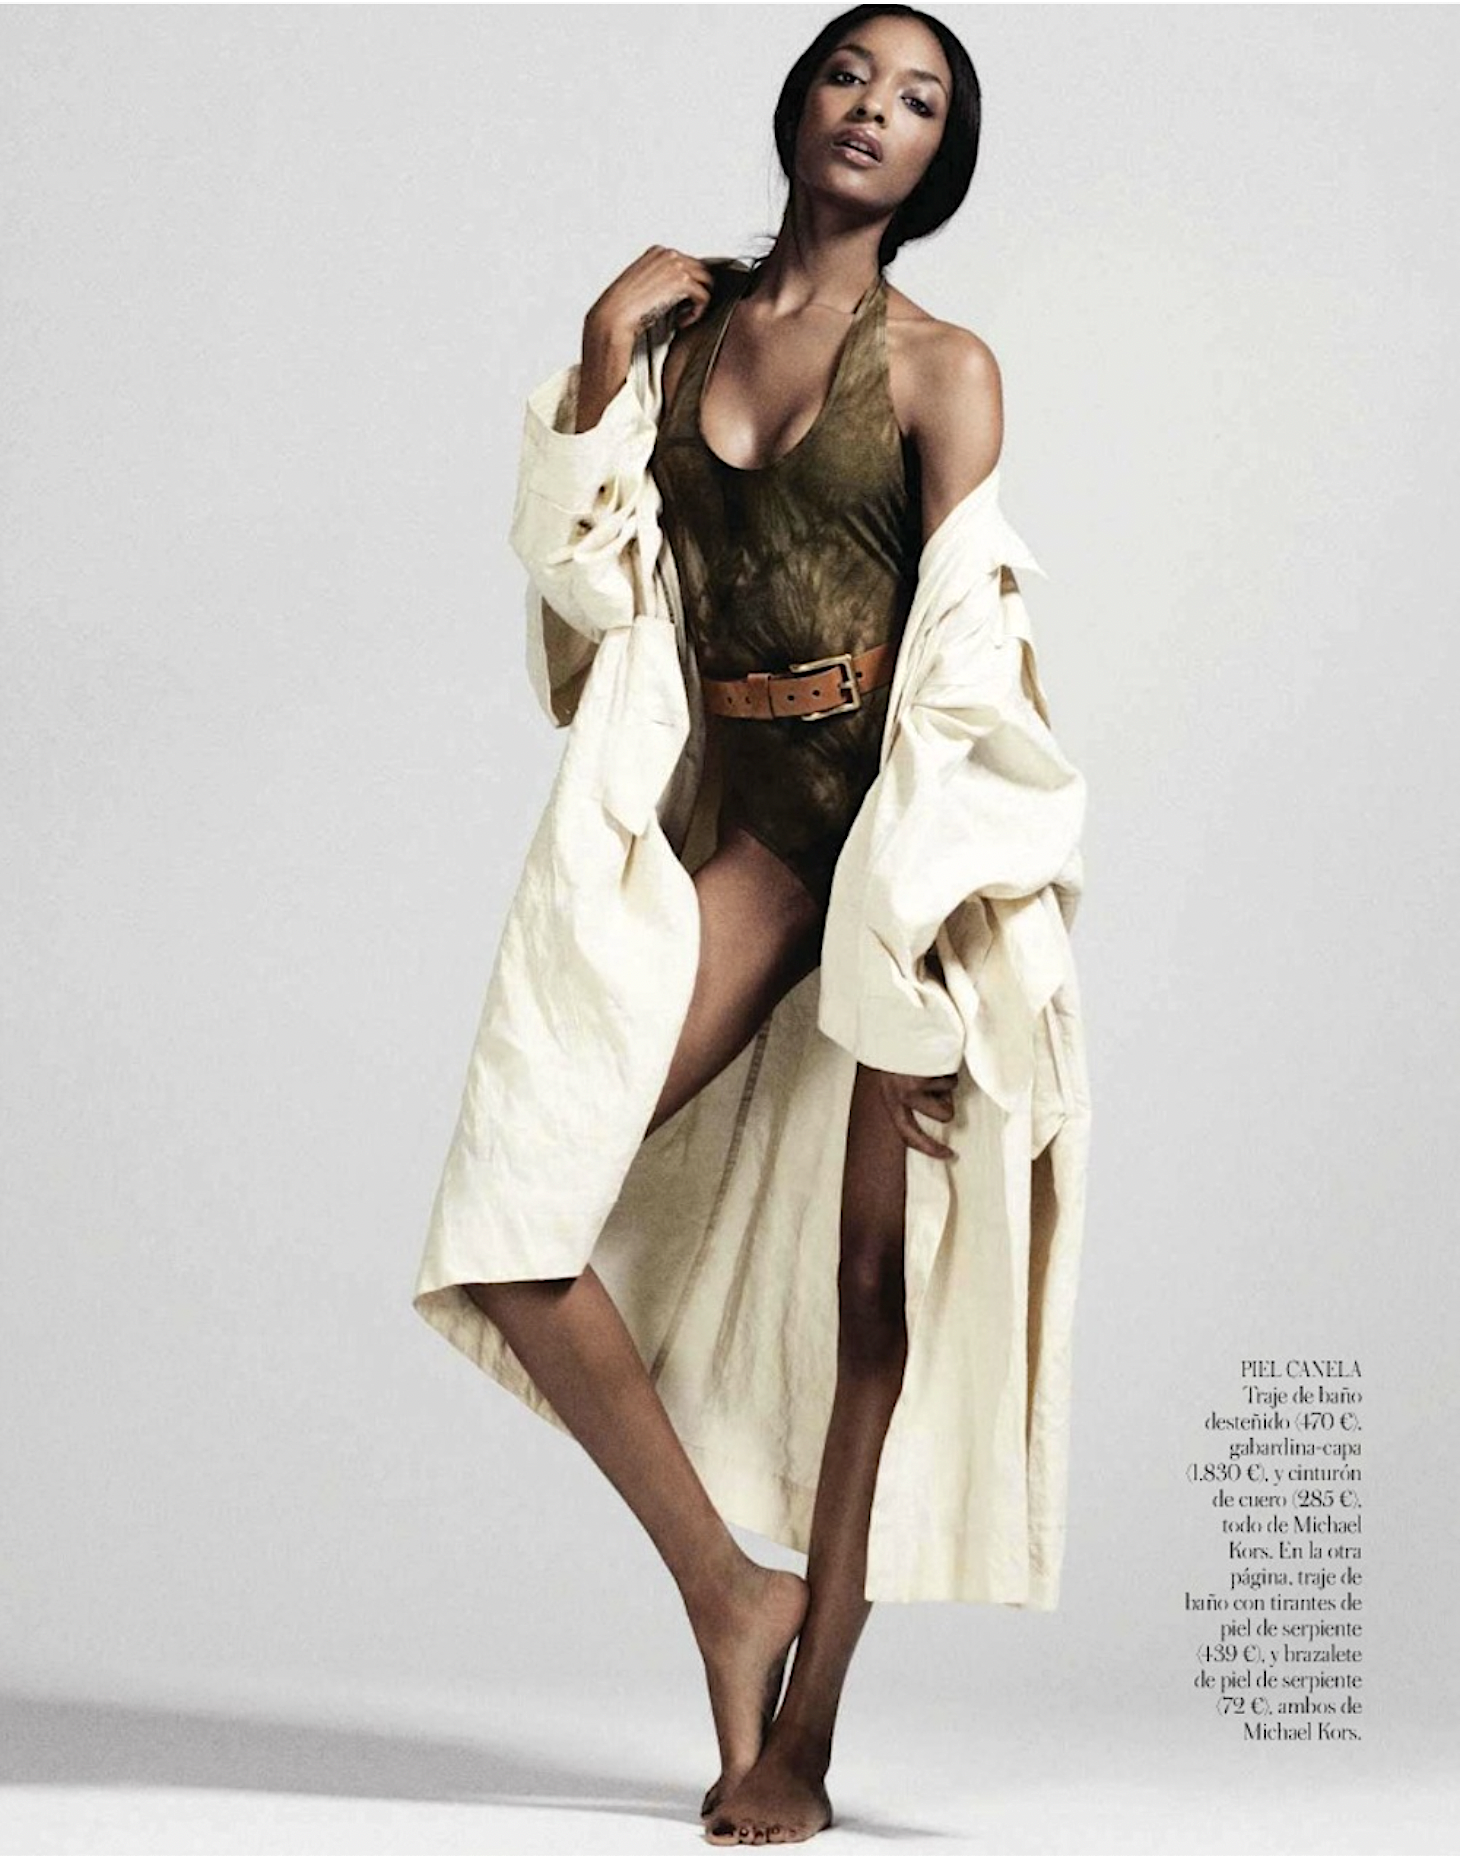 Jourdan-Dunn-by-Quentin-Briey-Vogue-Spain-June-2012-4.png